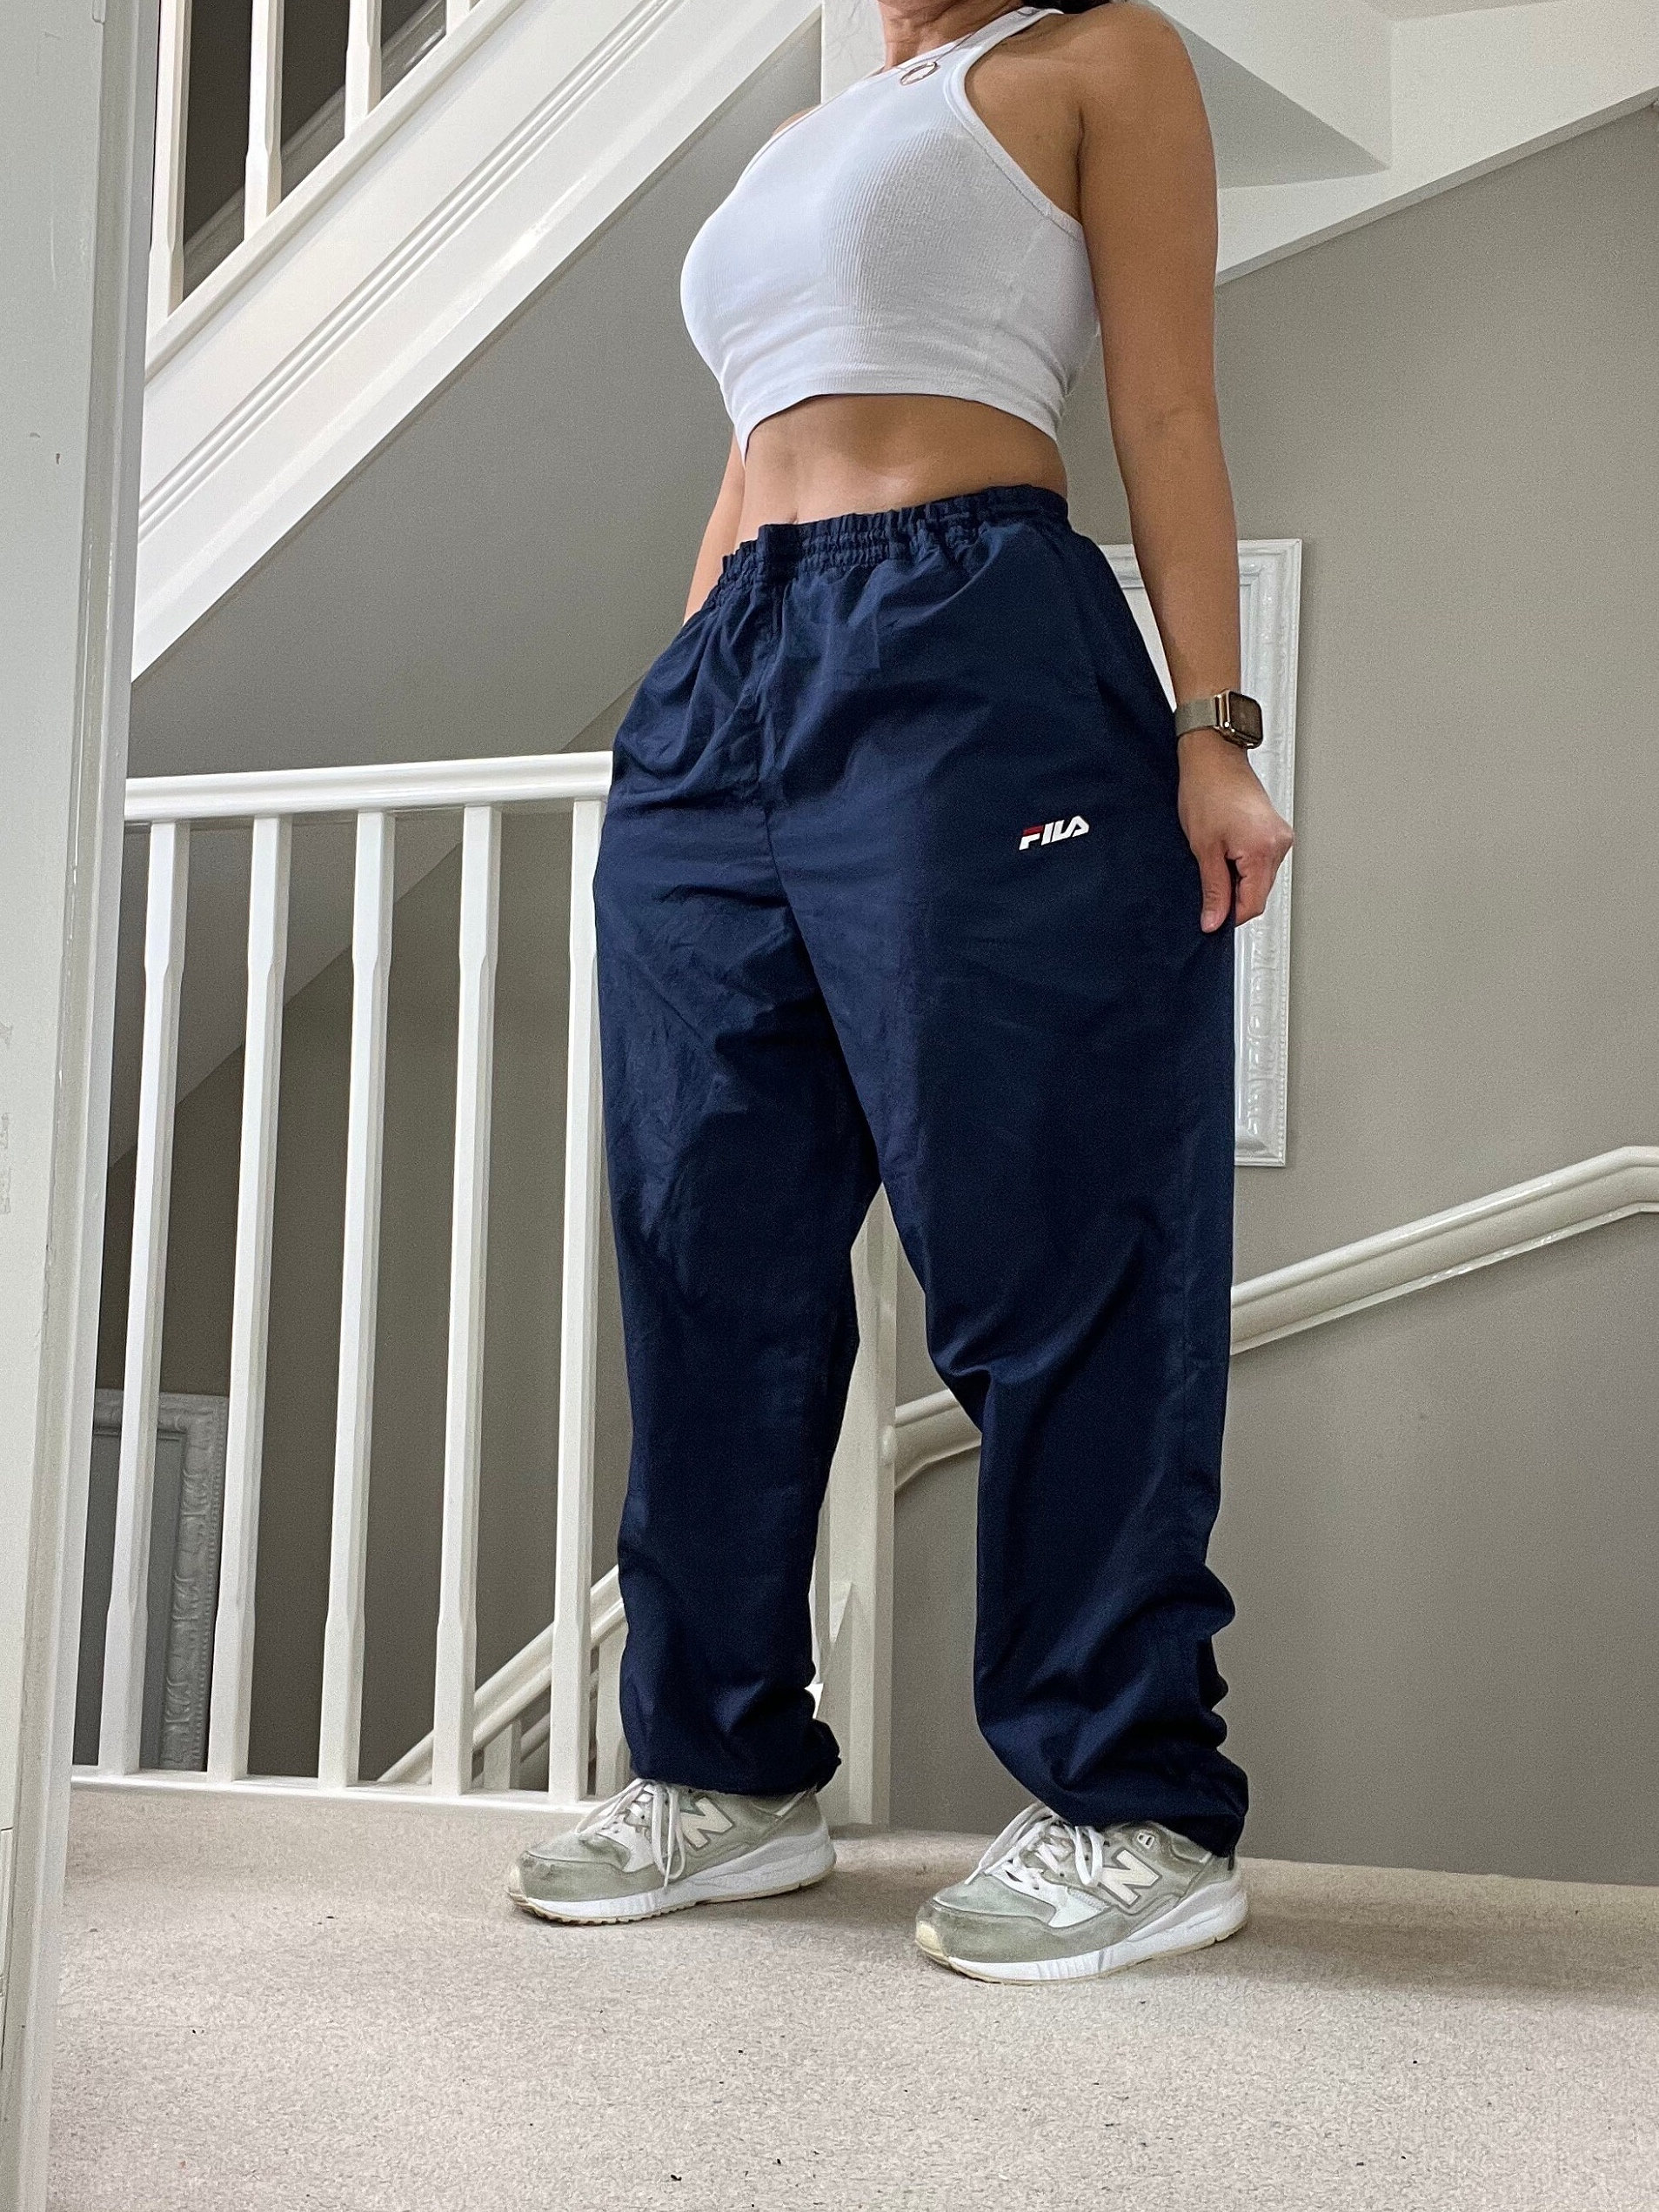 Fila Wide-Leg Athletic Pants for Women